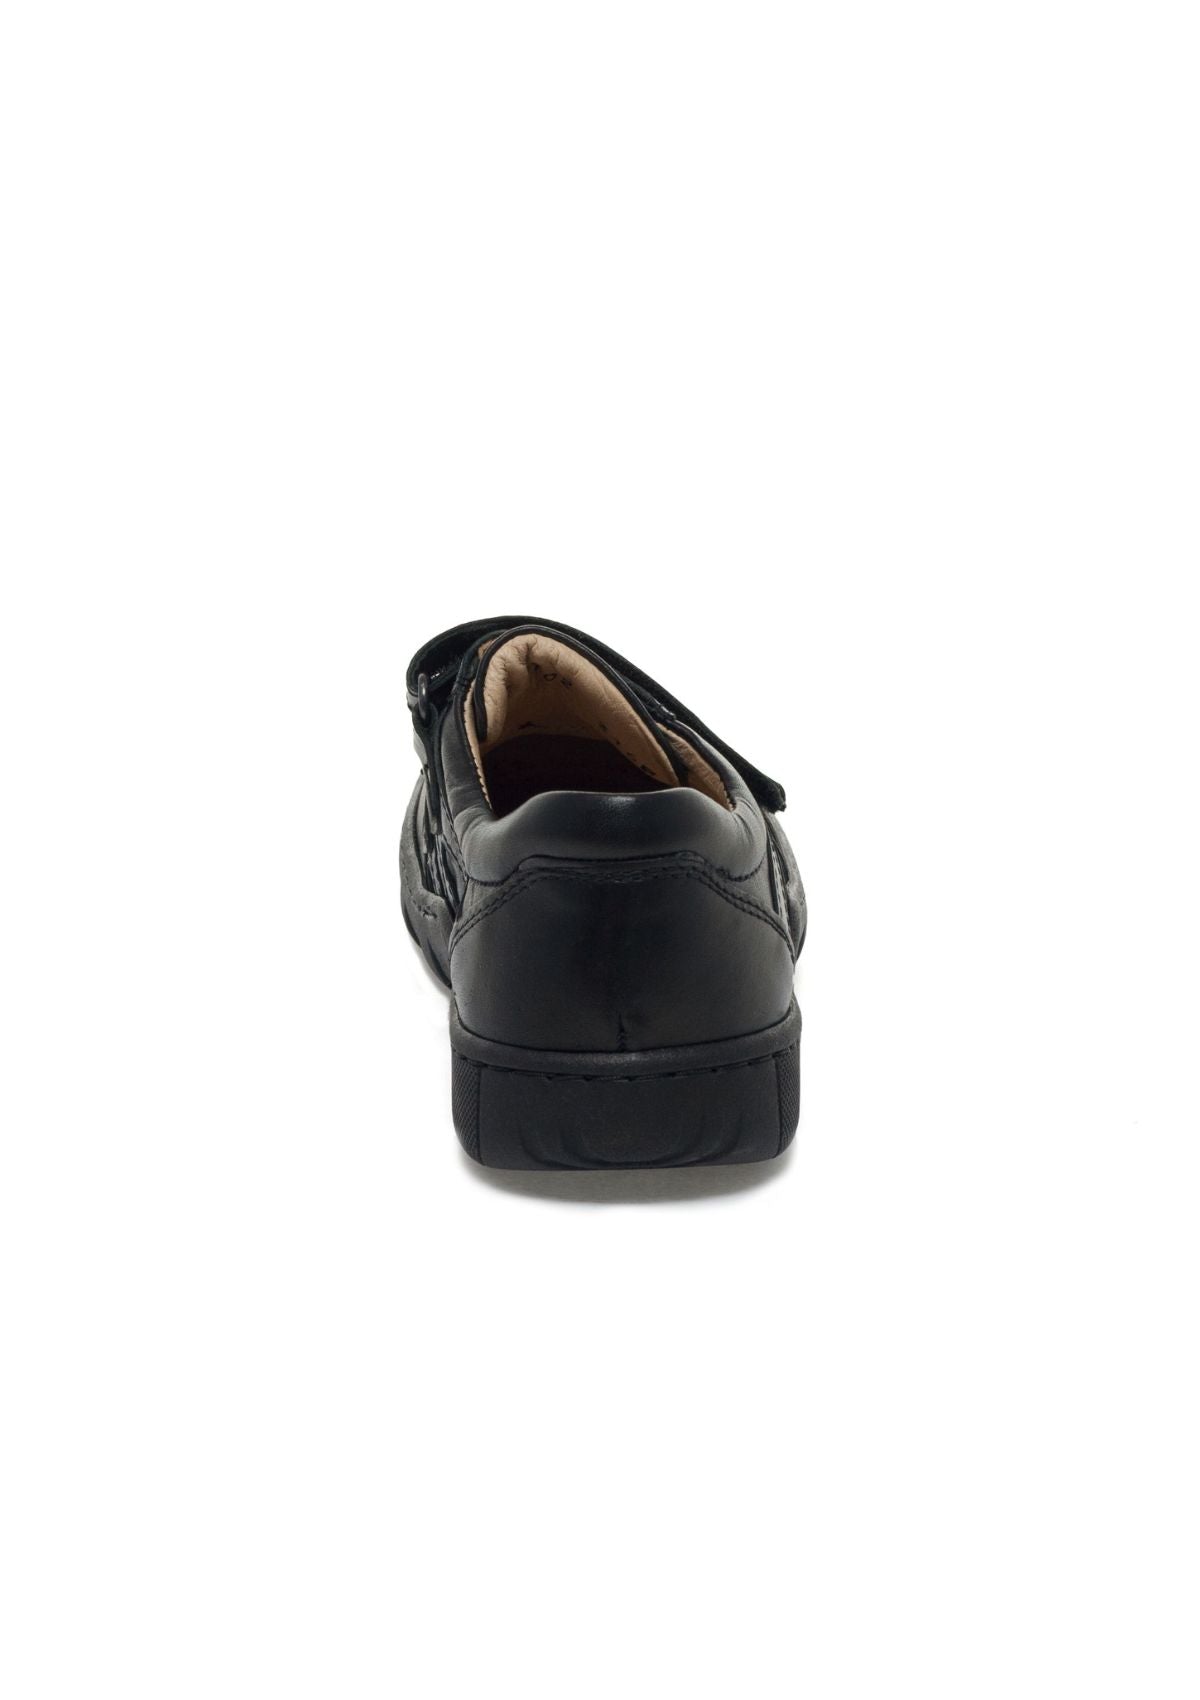 Boys School Shoe-Petasil-Victor (Black Leather) Back view